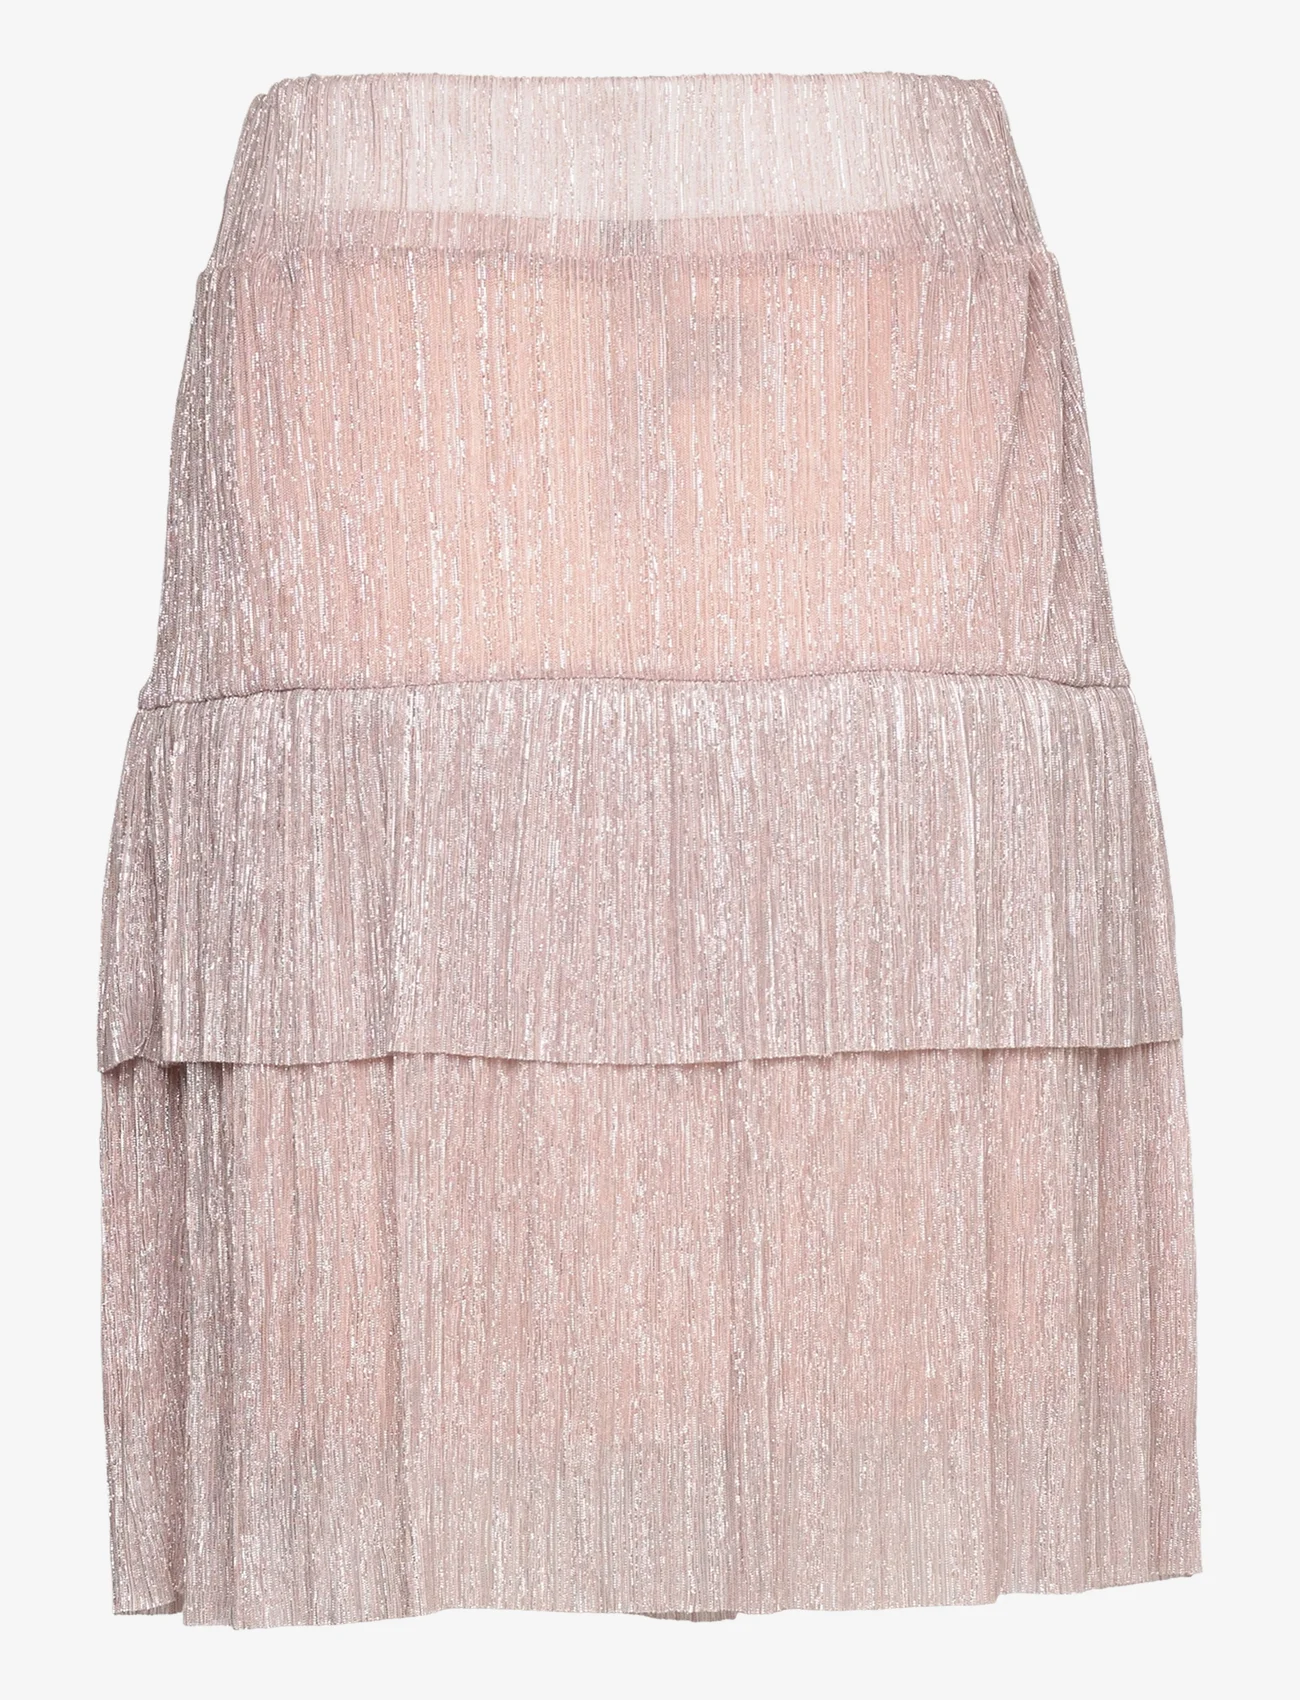 Noella - Caly Skirt - korte rokken - rose w. silver - 1